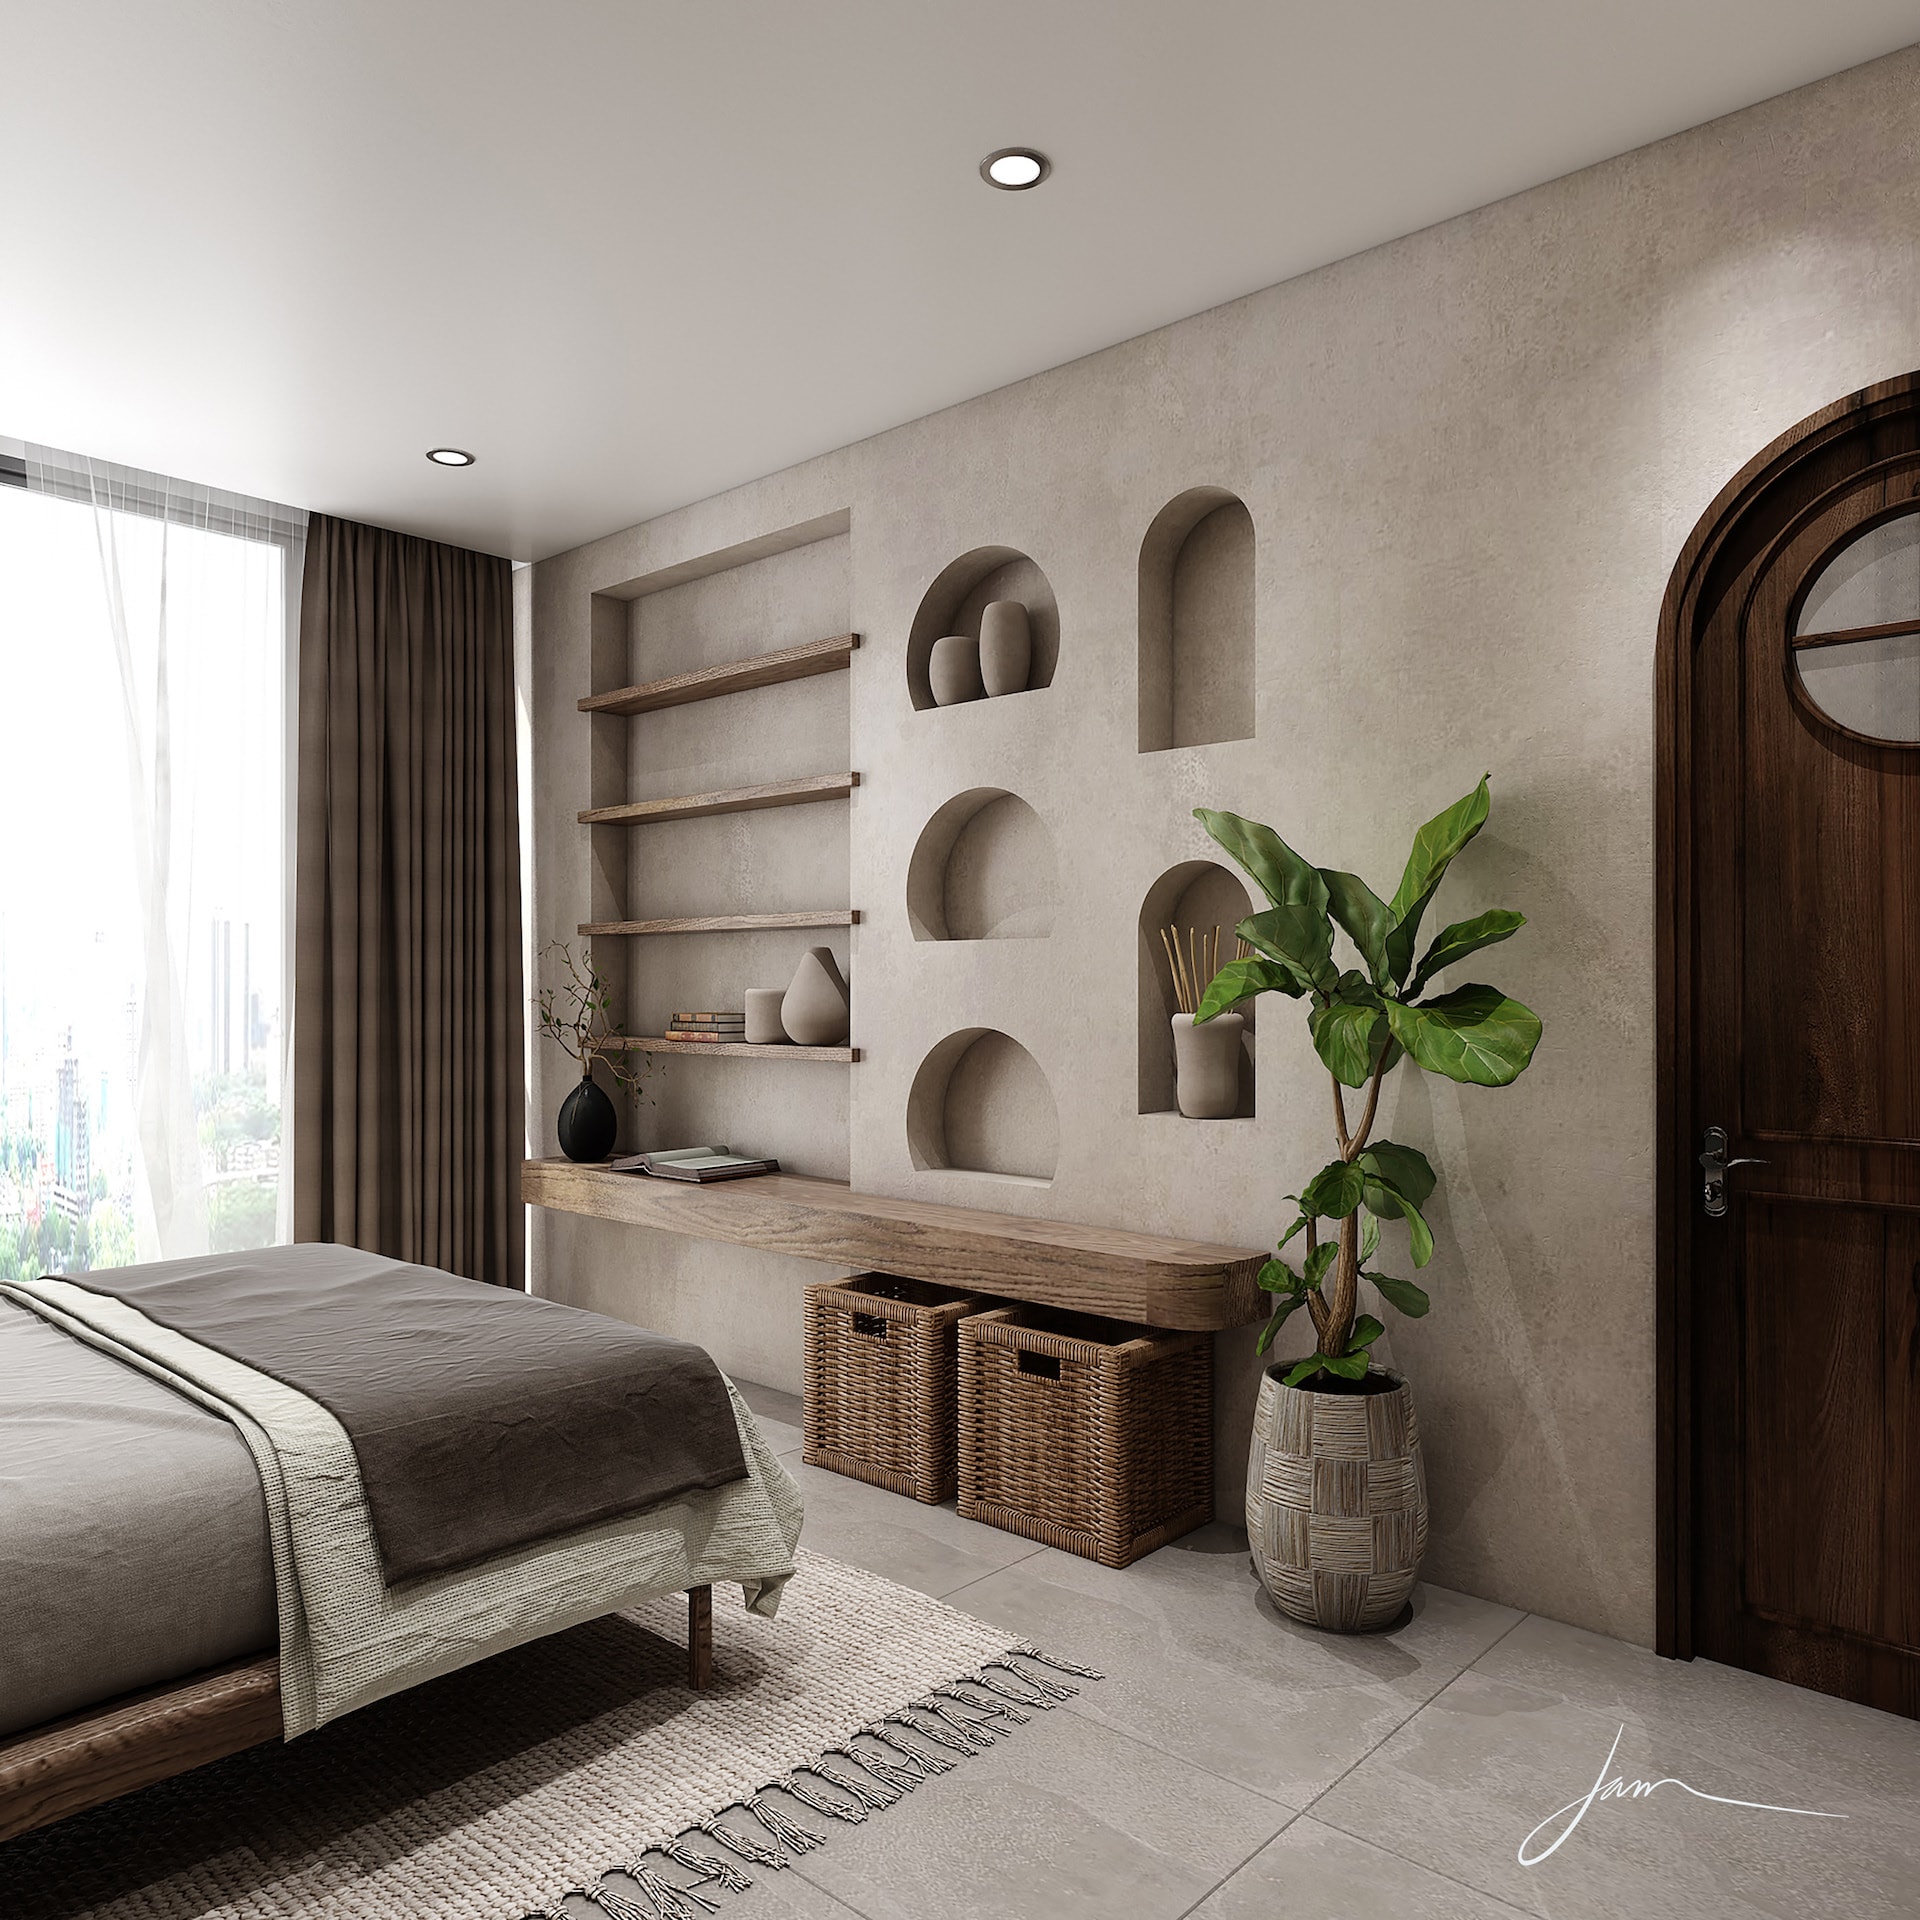 wabi sabi interior design bedroom